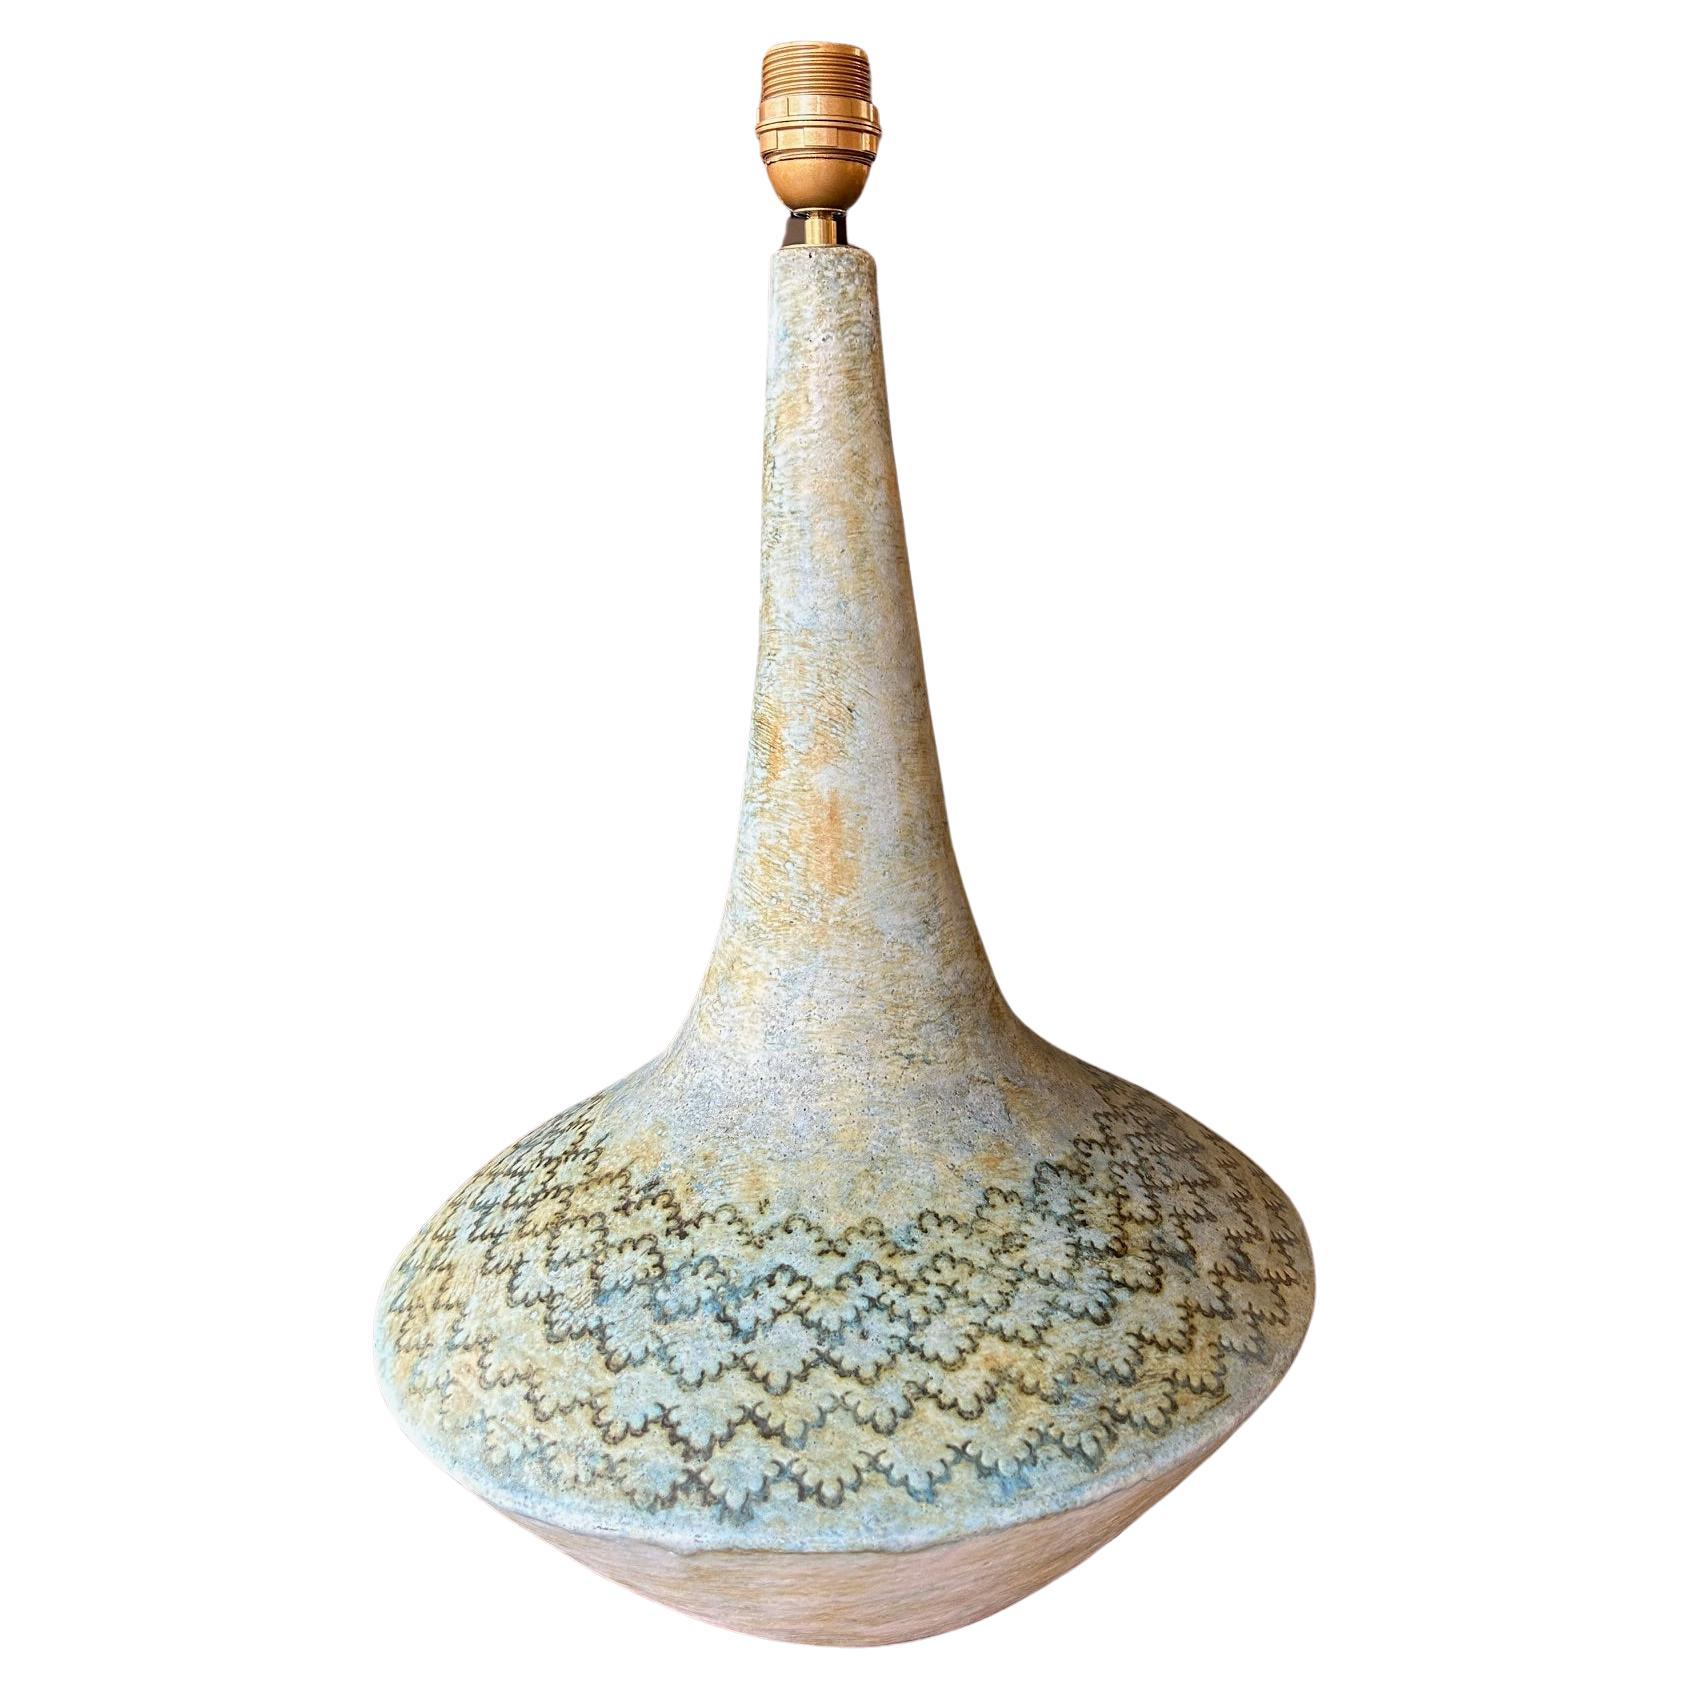 Keramiklampe von Les 2 Potiers, Frankreich, 1960er Jahre